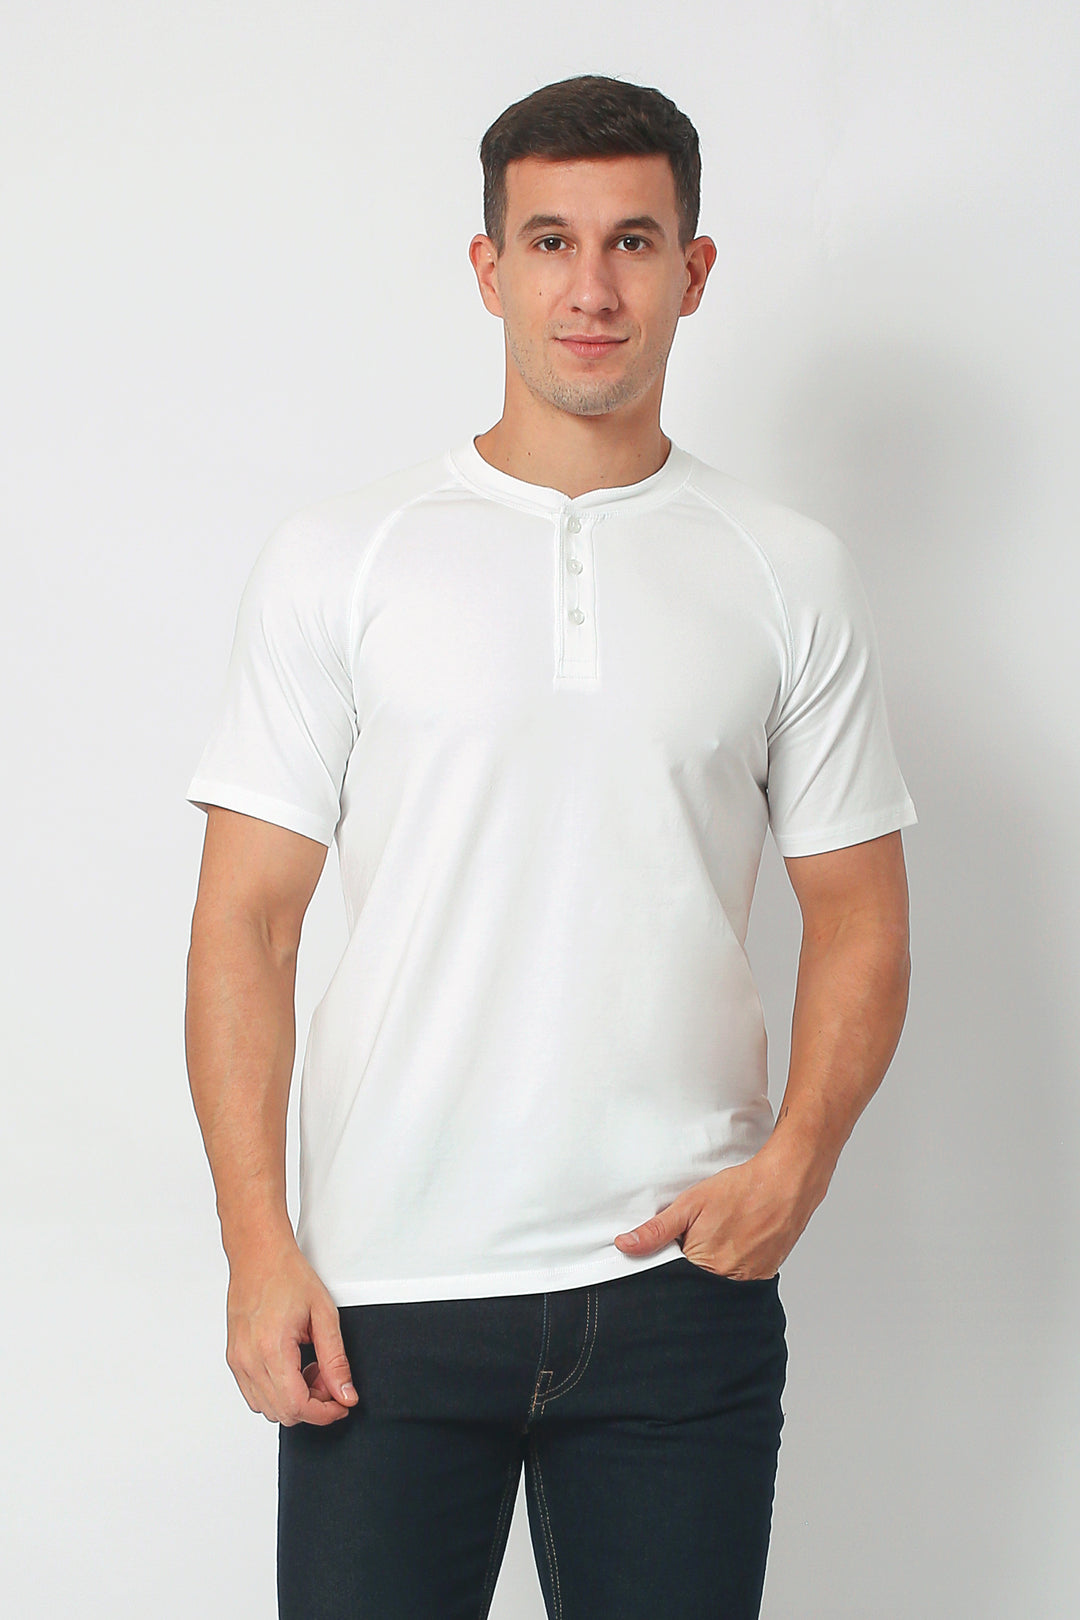 Cloud Short Sleeve Henley|Men's T-Shirt|ROMEO NYC